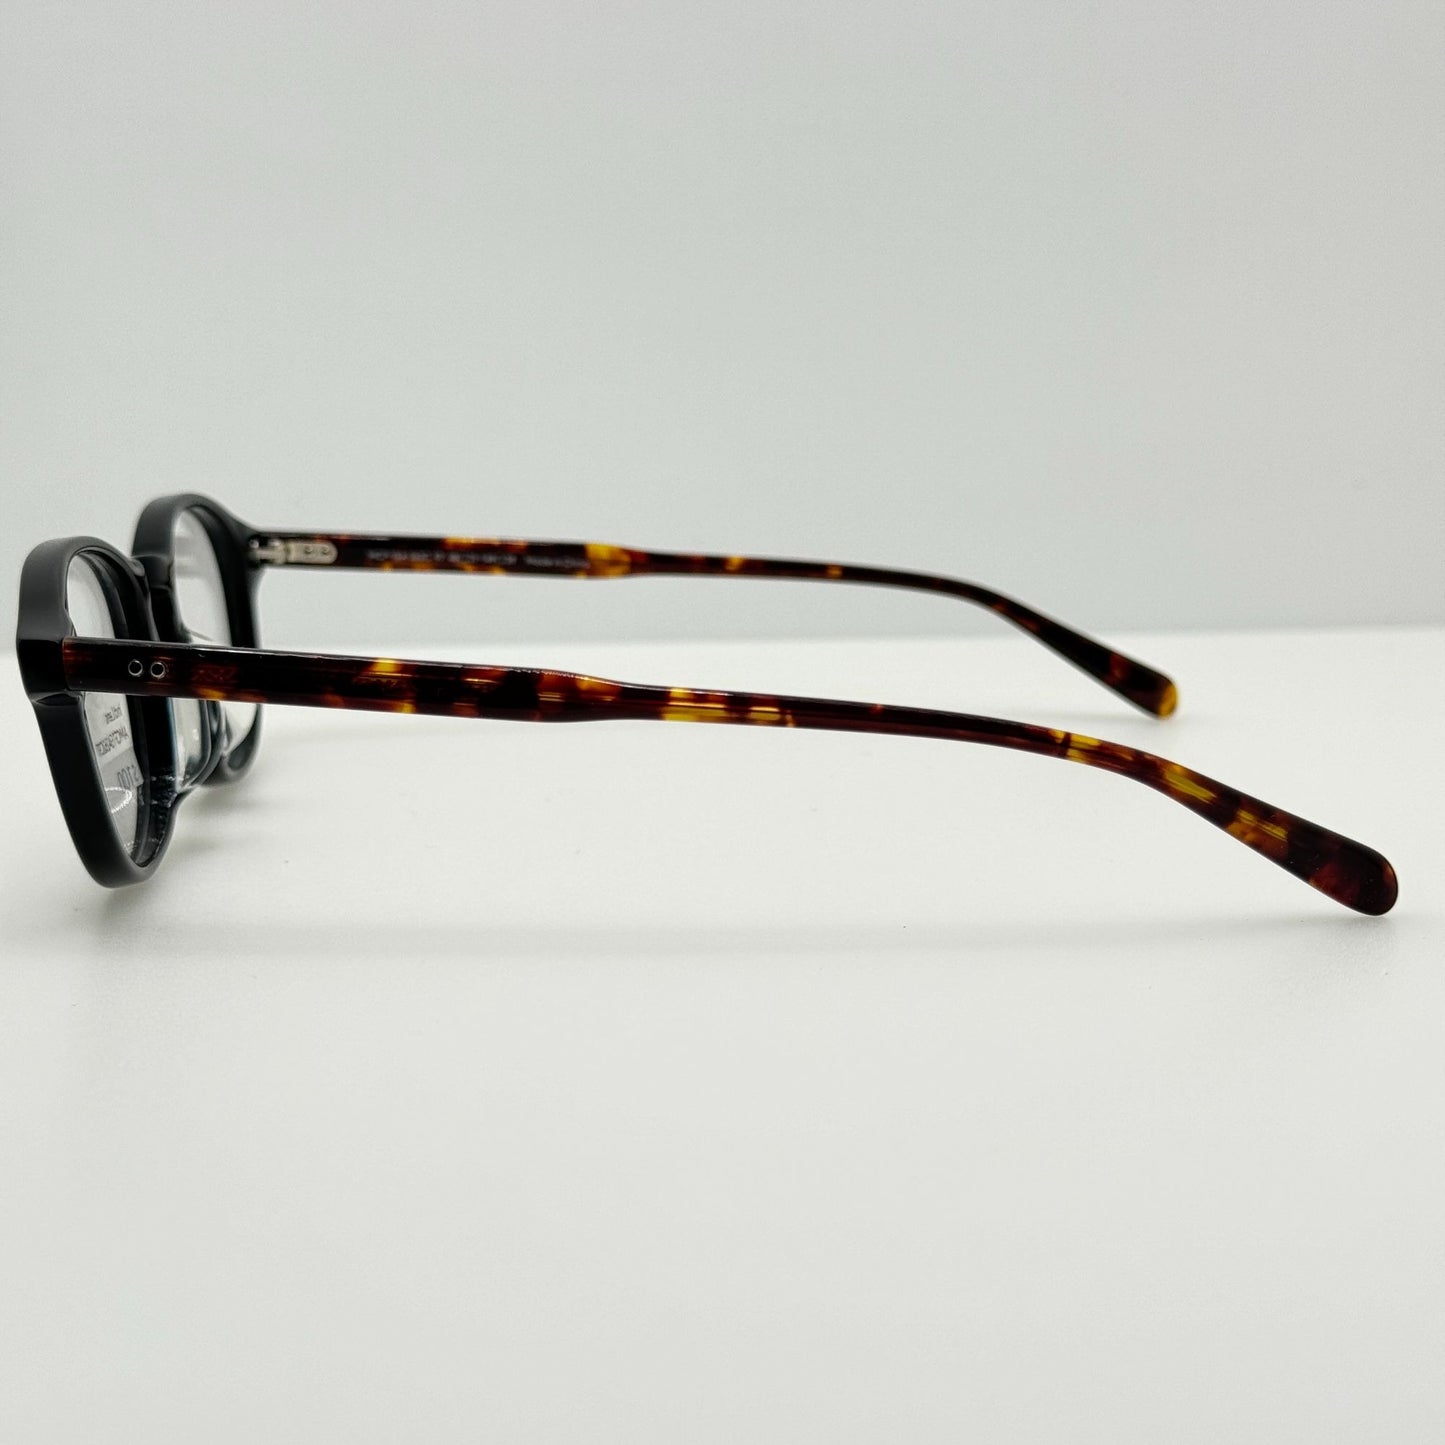 Jins Eyeglasses Eye Glasses Frames MCF-15A-262C 97 48-21-149 39